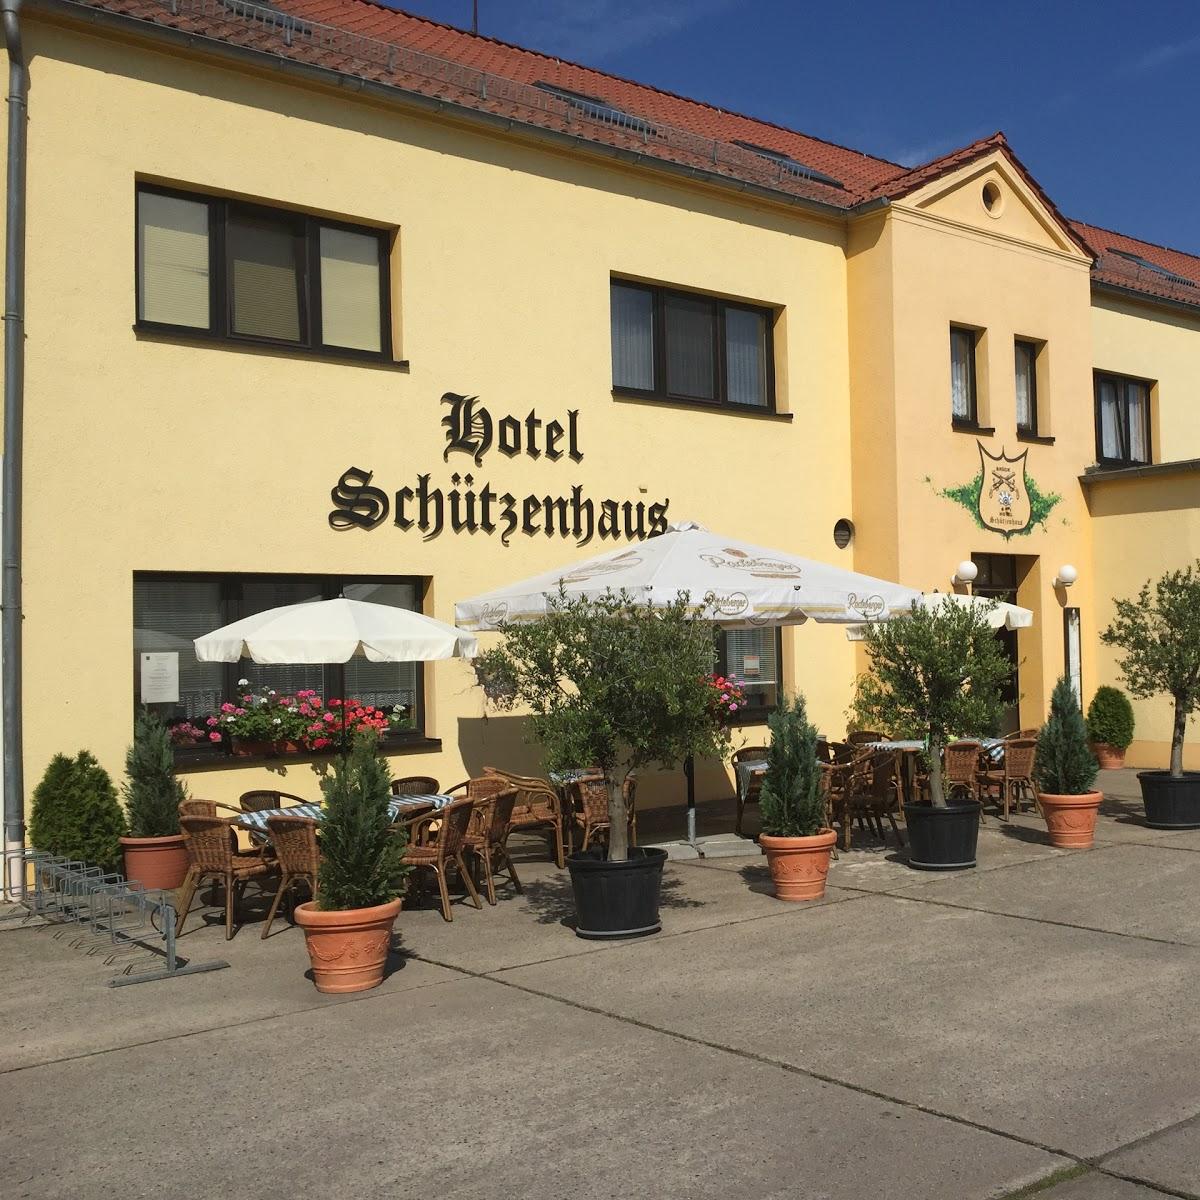 Restaurant "Hotel Schützenhaus" in Brück